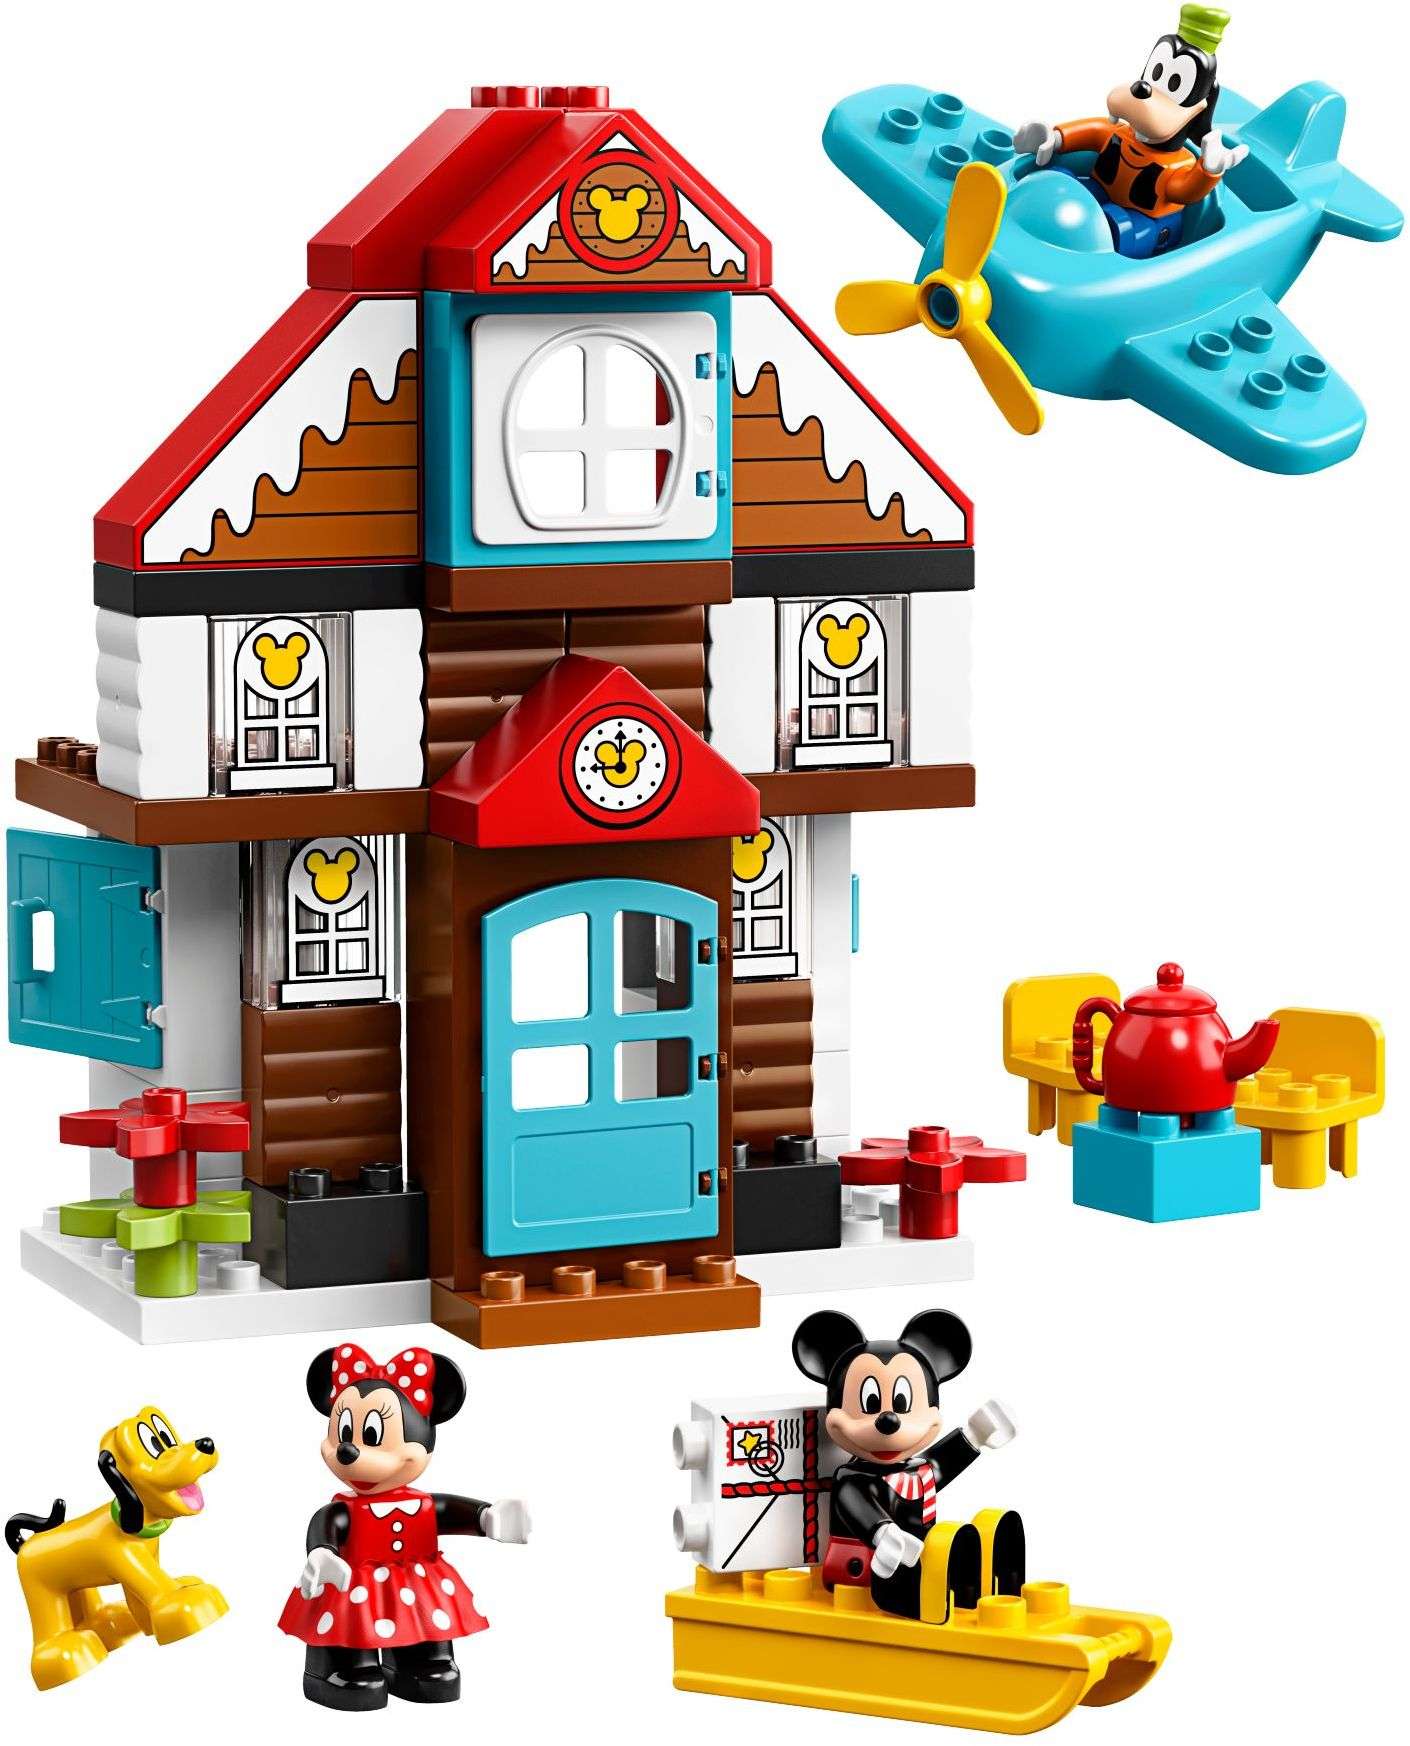 LEGO DUPLO - Mickey